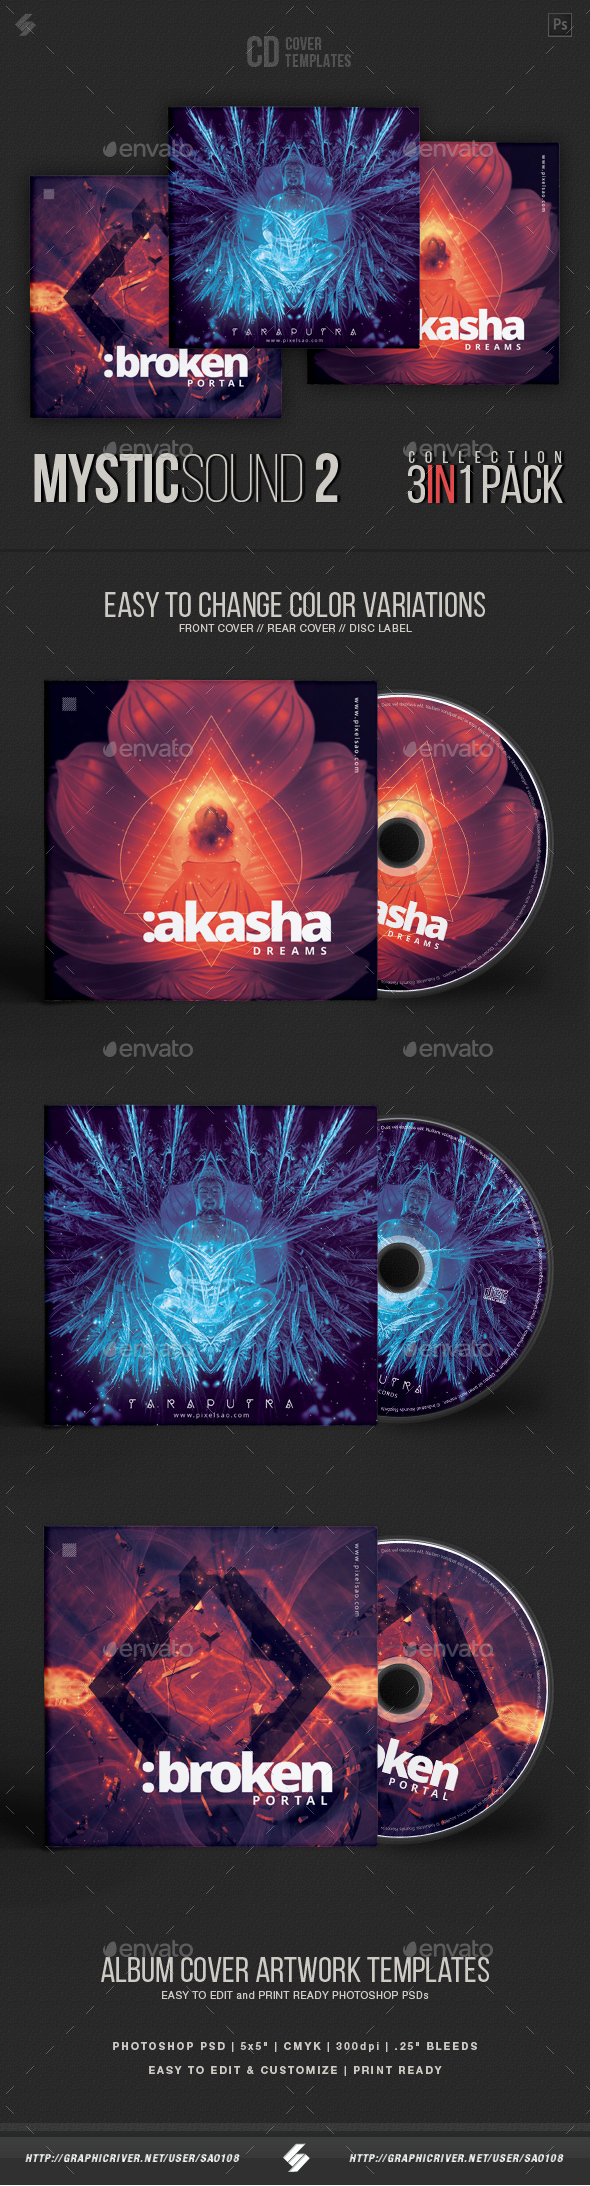 GraphicRiver Mystic Sound Collection 2 CD Cover Artwork Templates Bundle 20860882